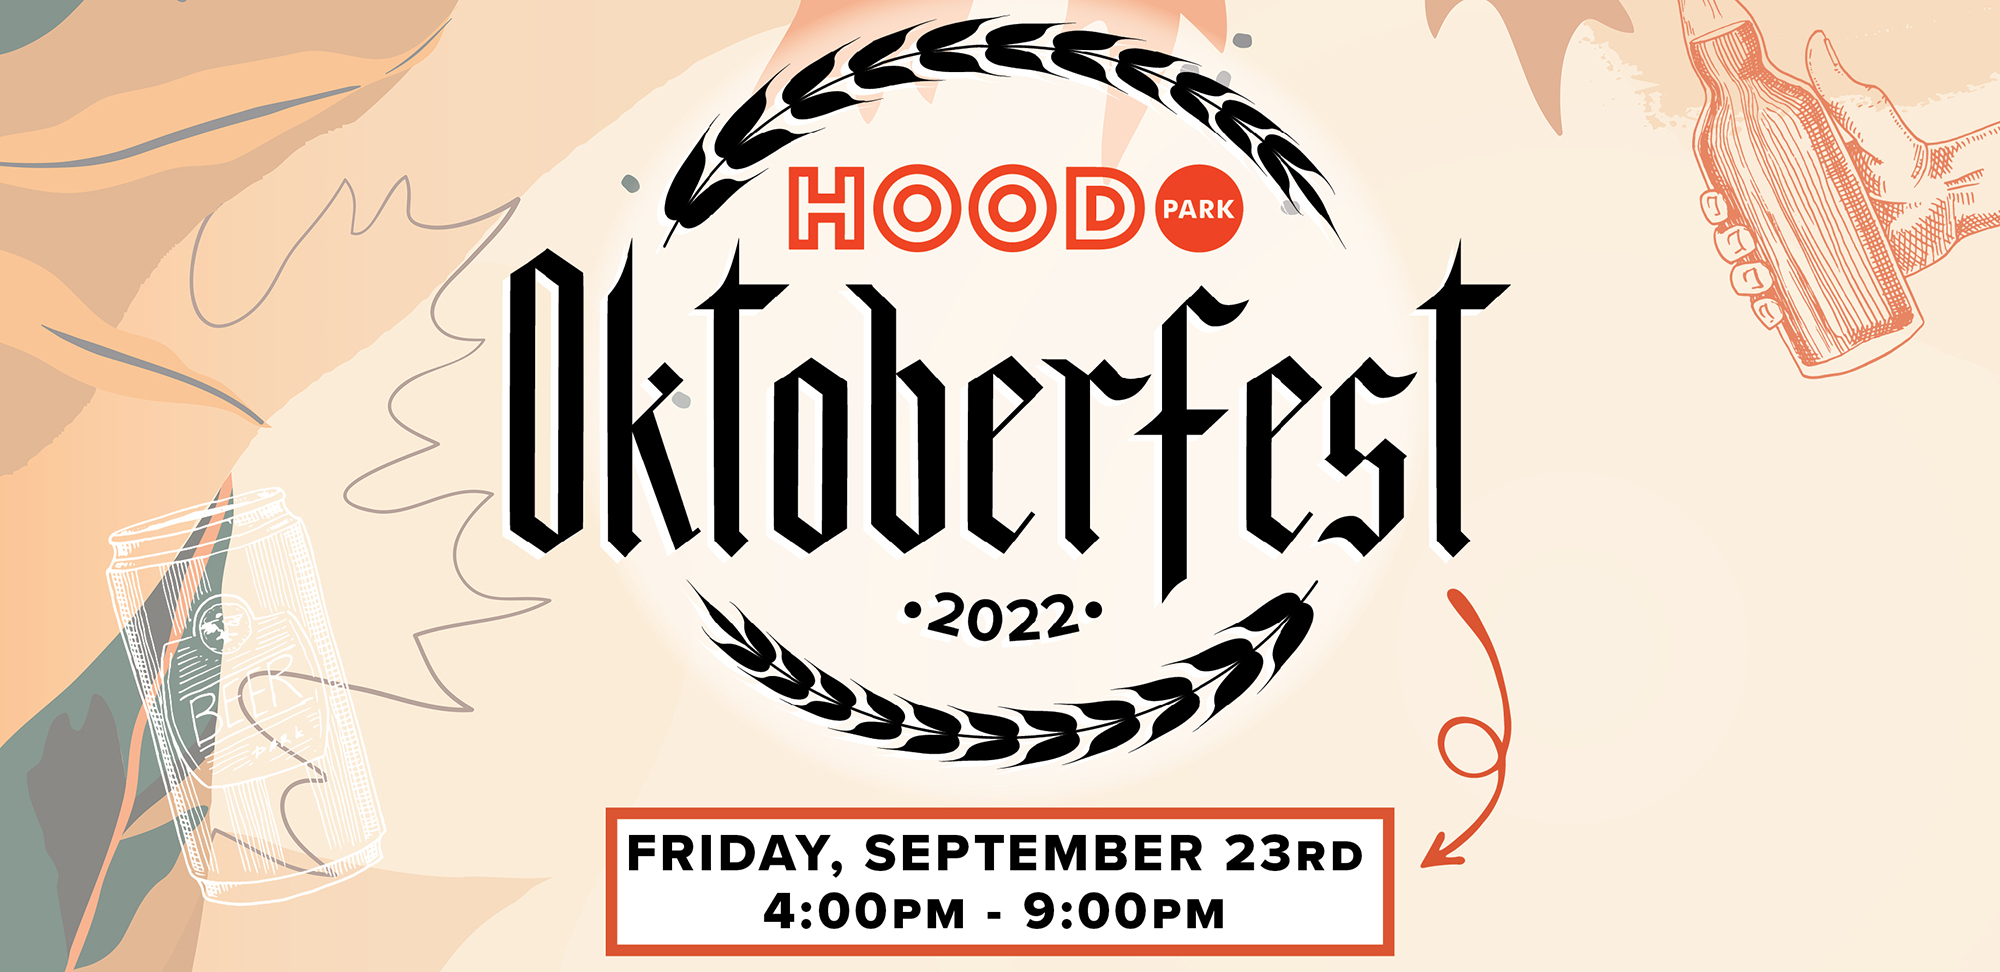 Hood Park 1st Annual Oktoberfest